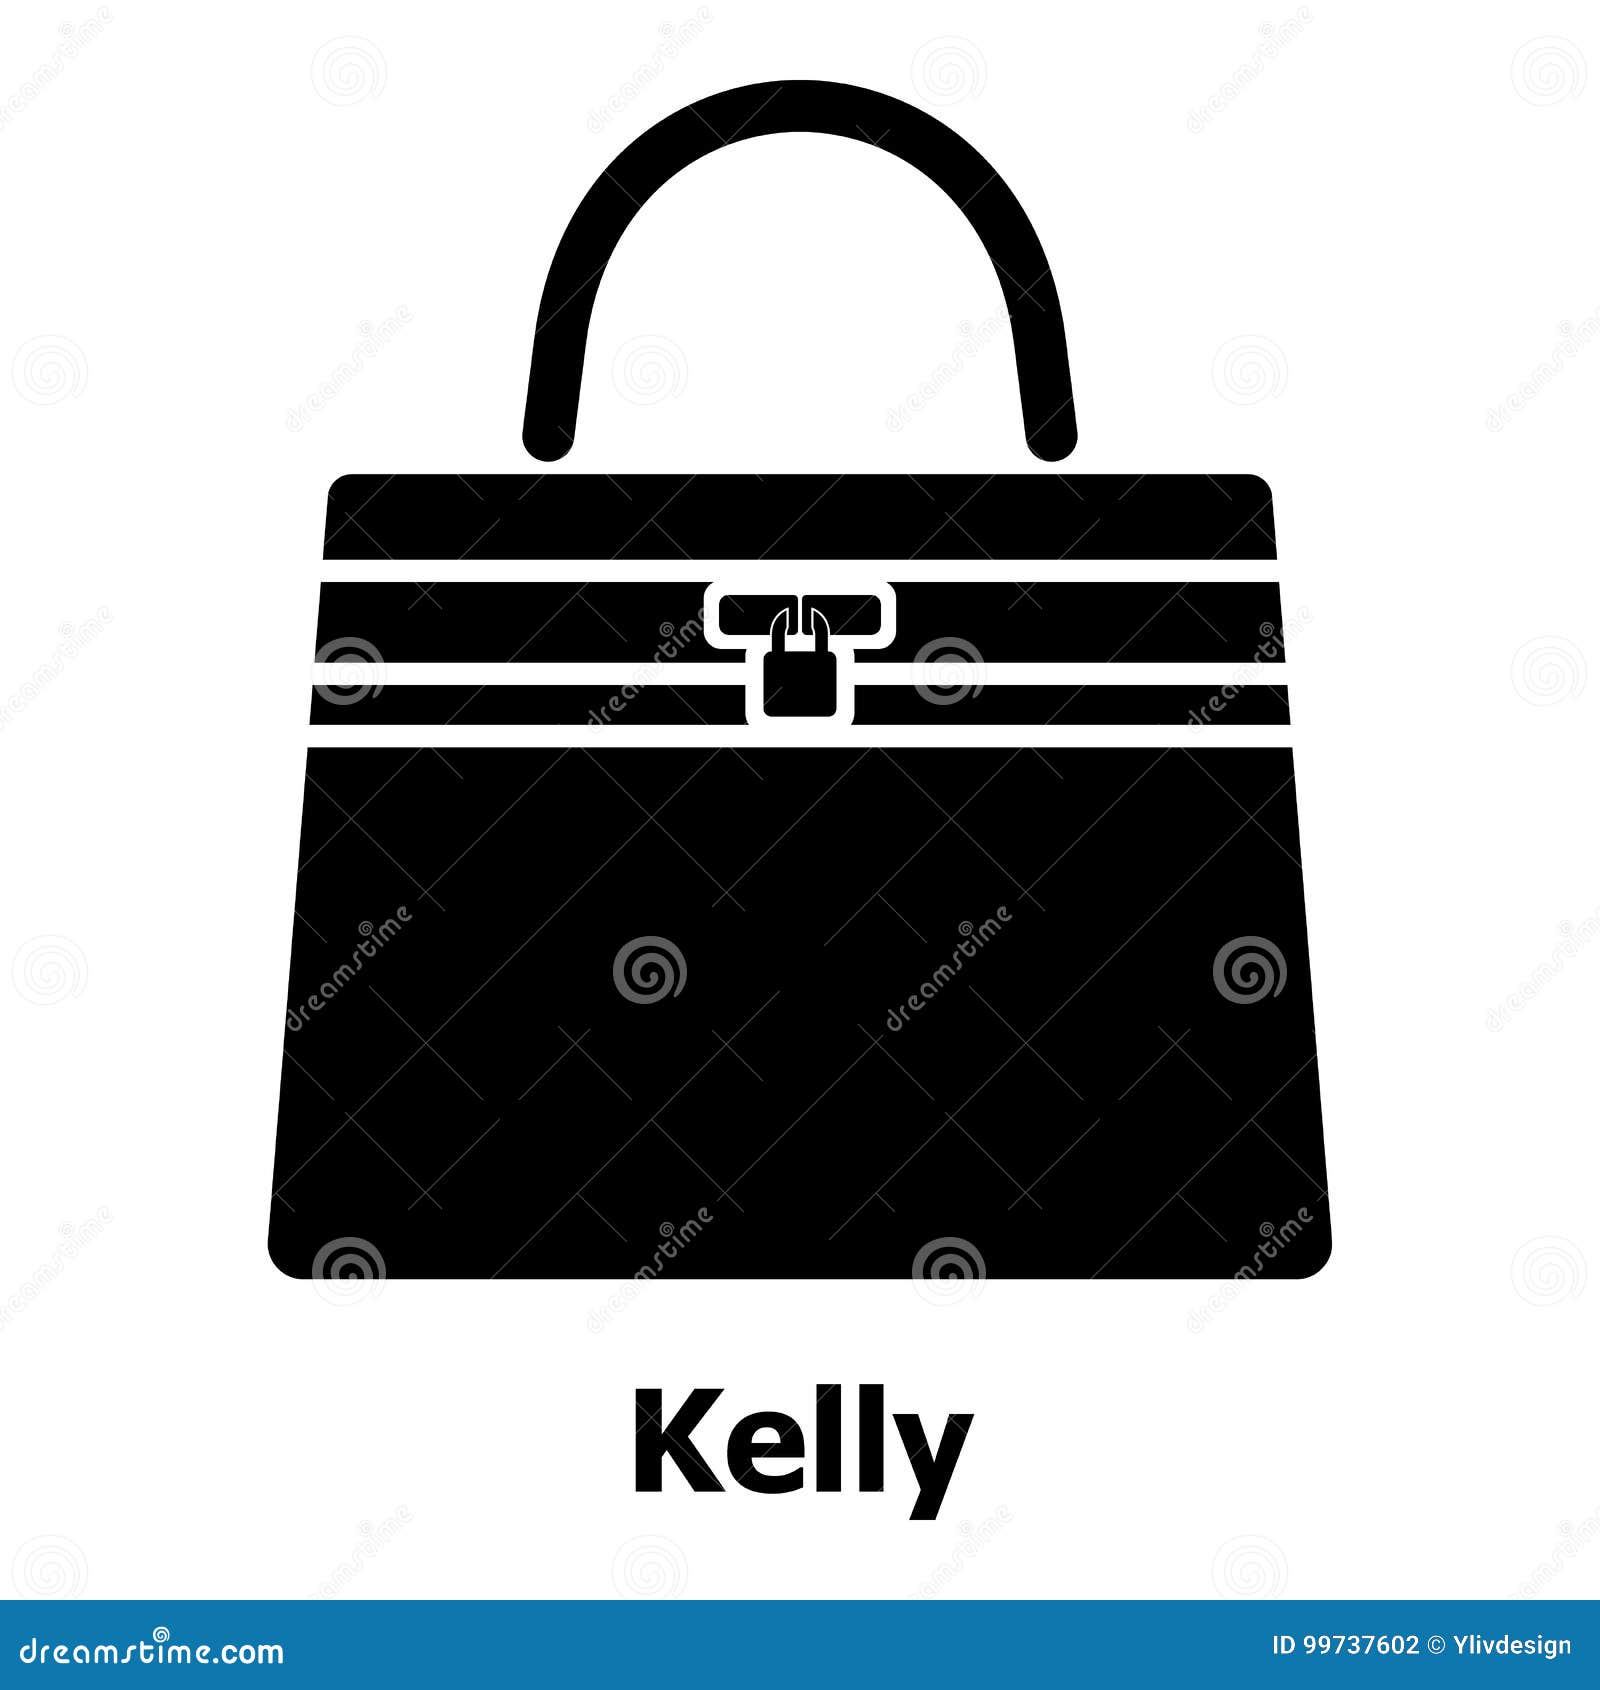 Kelly Bag Stock Photos - Free & Royalty-Free Stock Photos from